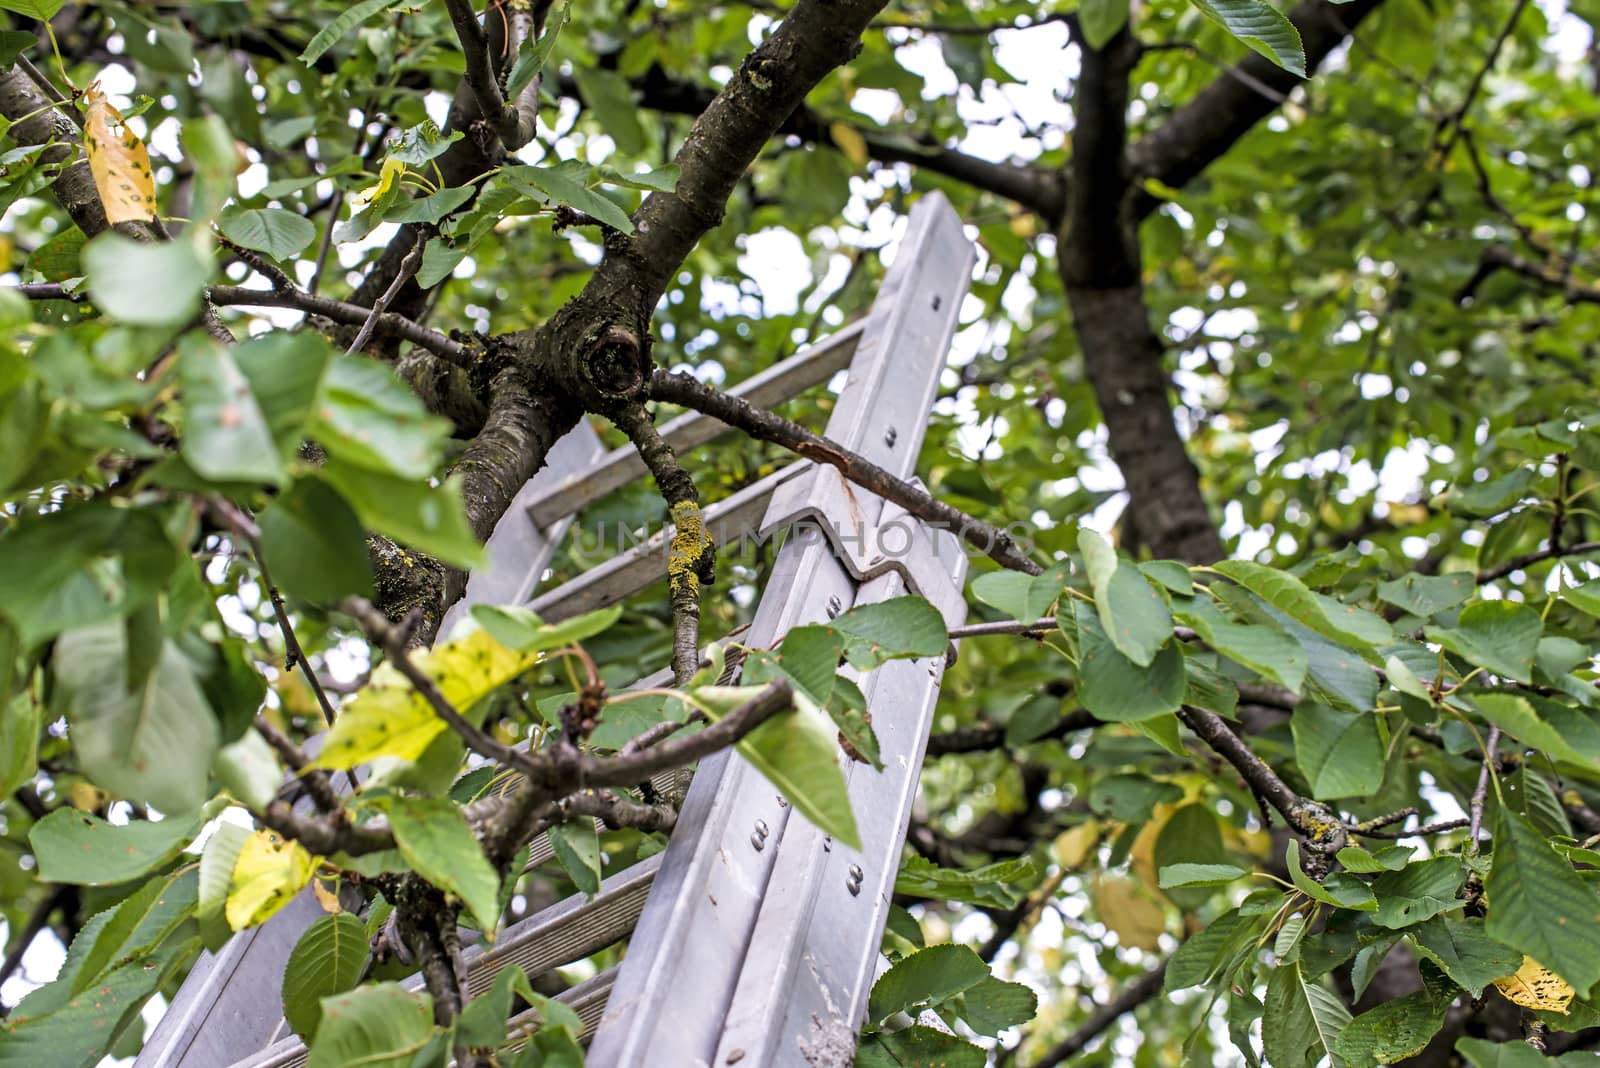 ladder at a fruit tree by Jochen